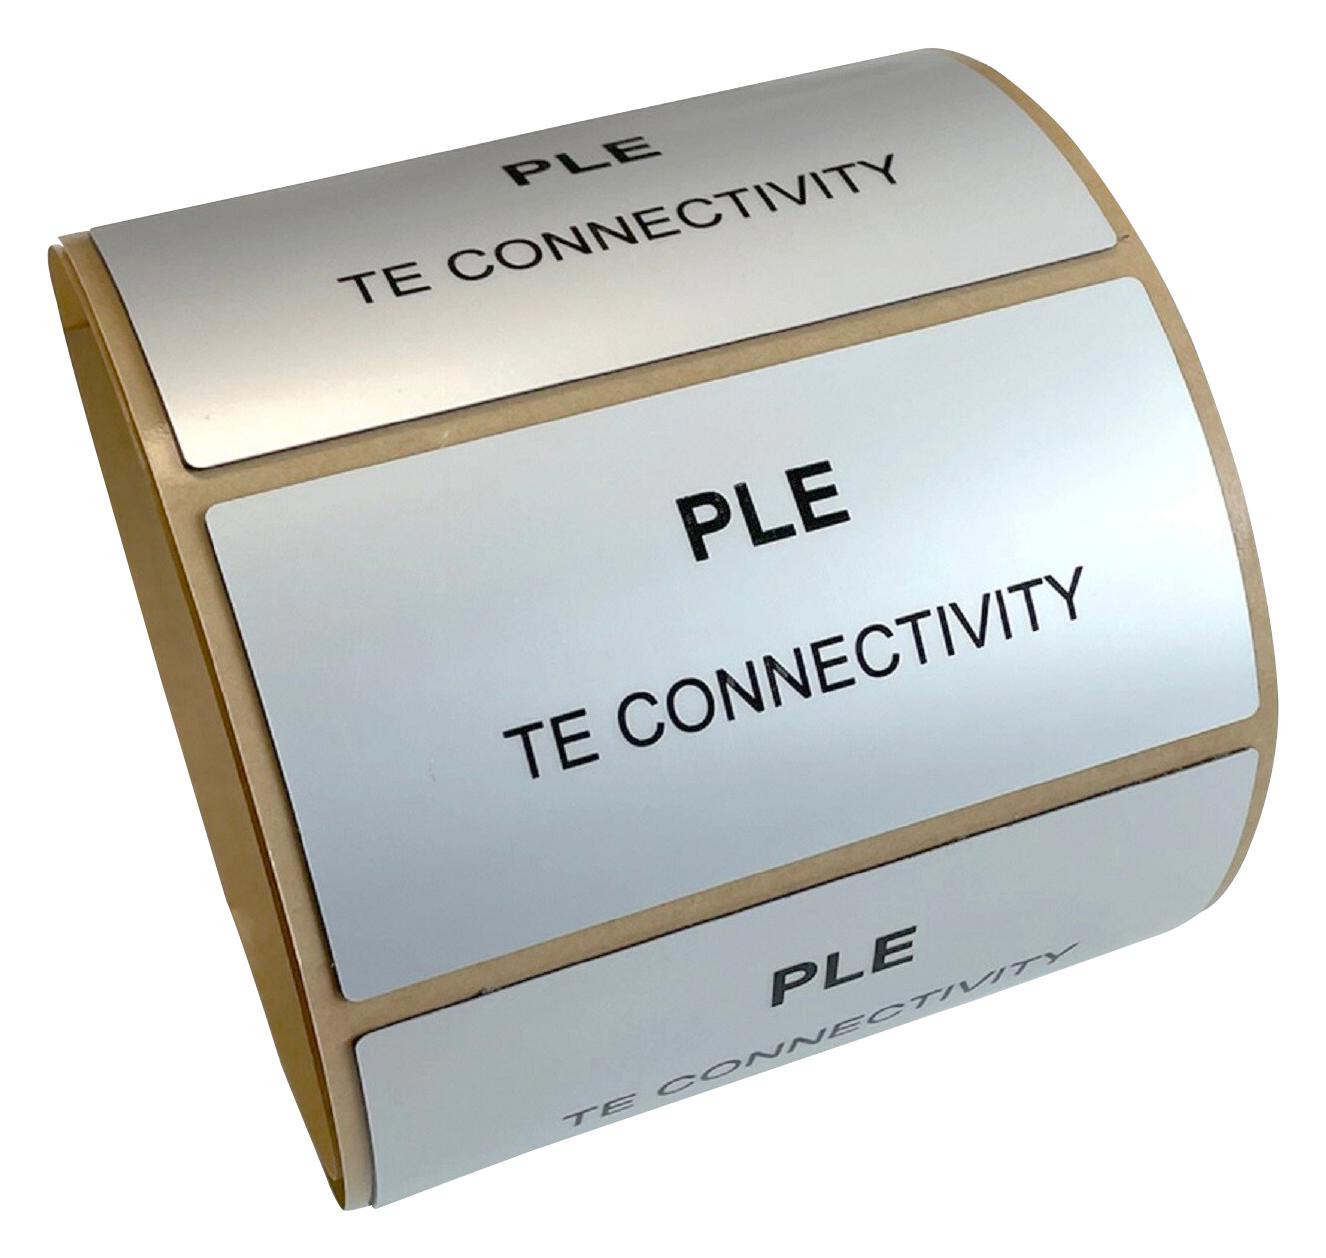 Entrelec TE Connectivity Ple-035009-Wh-1 Label, Polyester, White, 35mm X 9mm